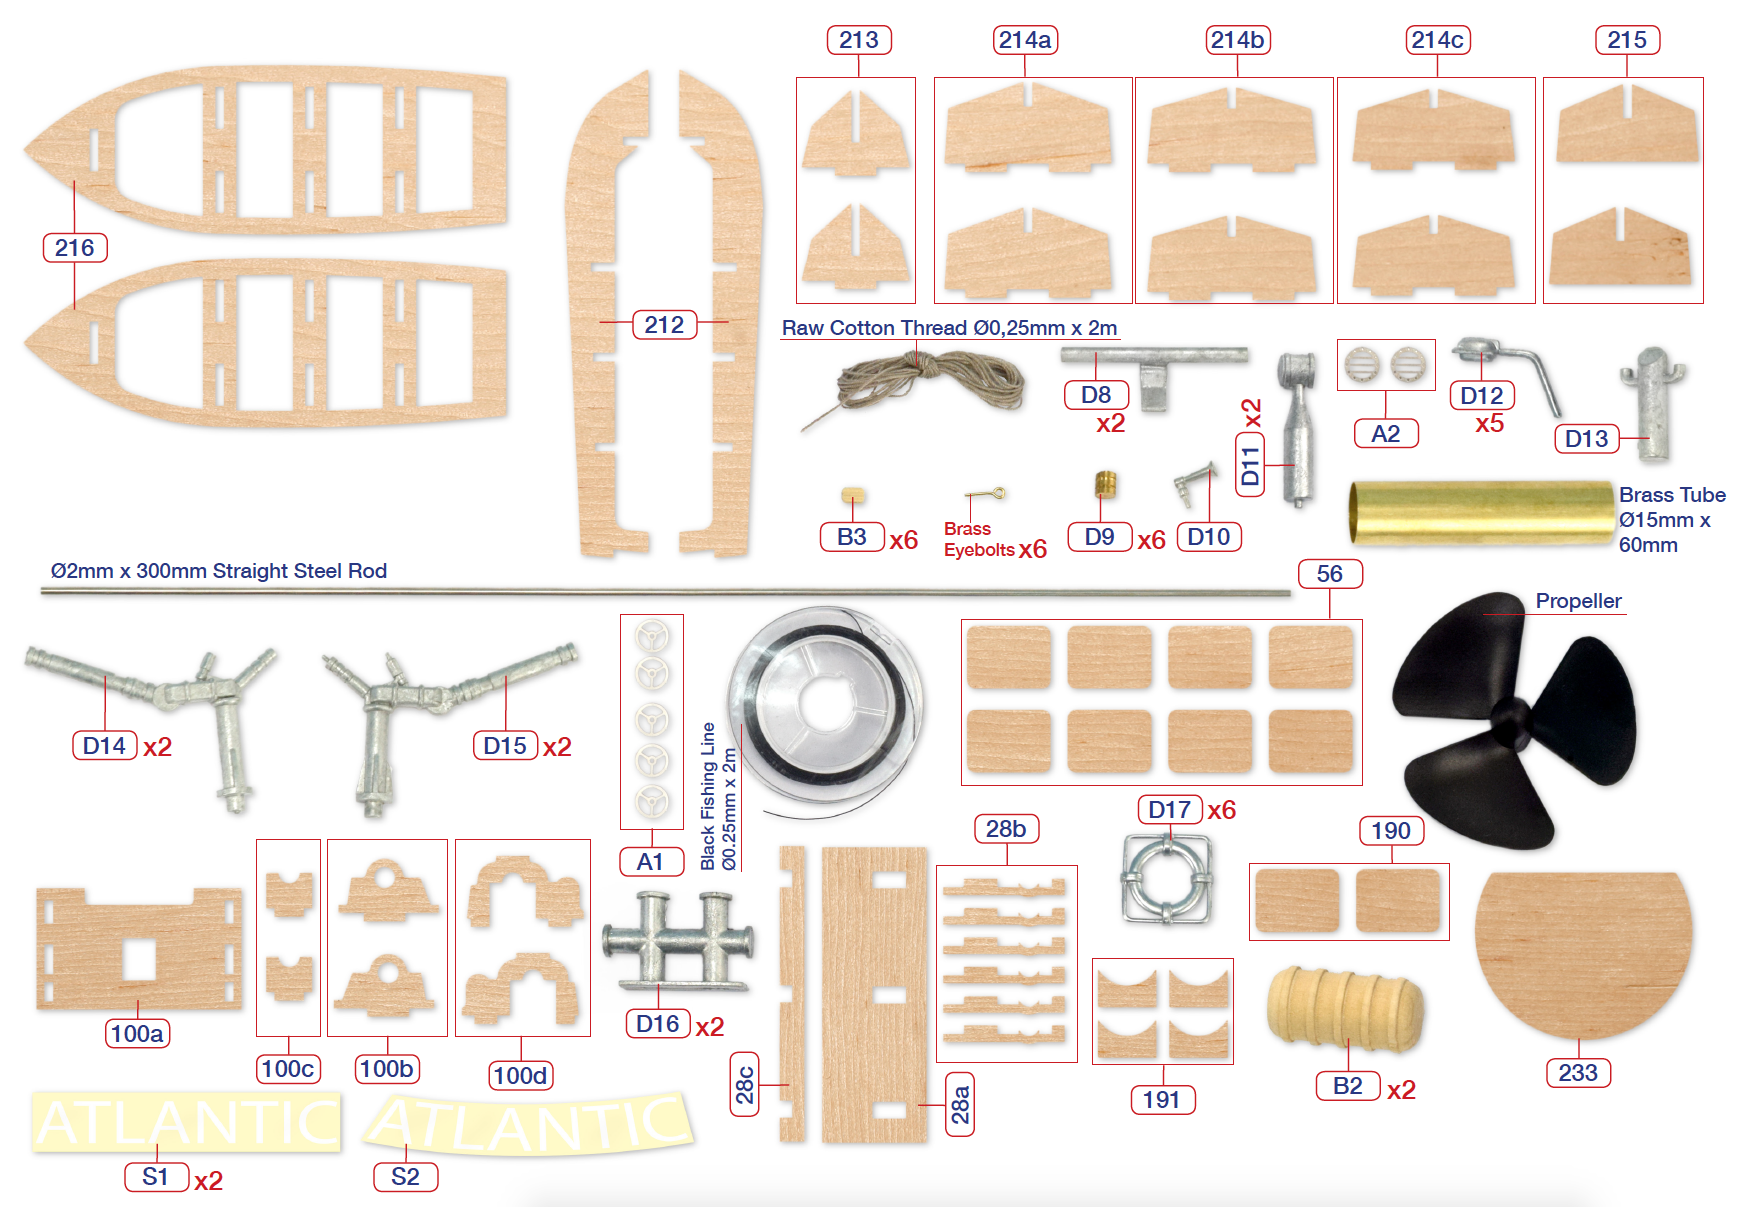 Assembly Guide for Tugboat Atlantic Model (20210) by Artesanía Latina.